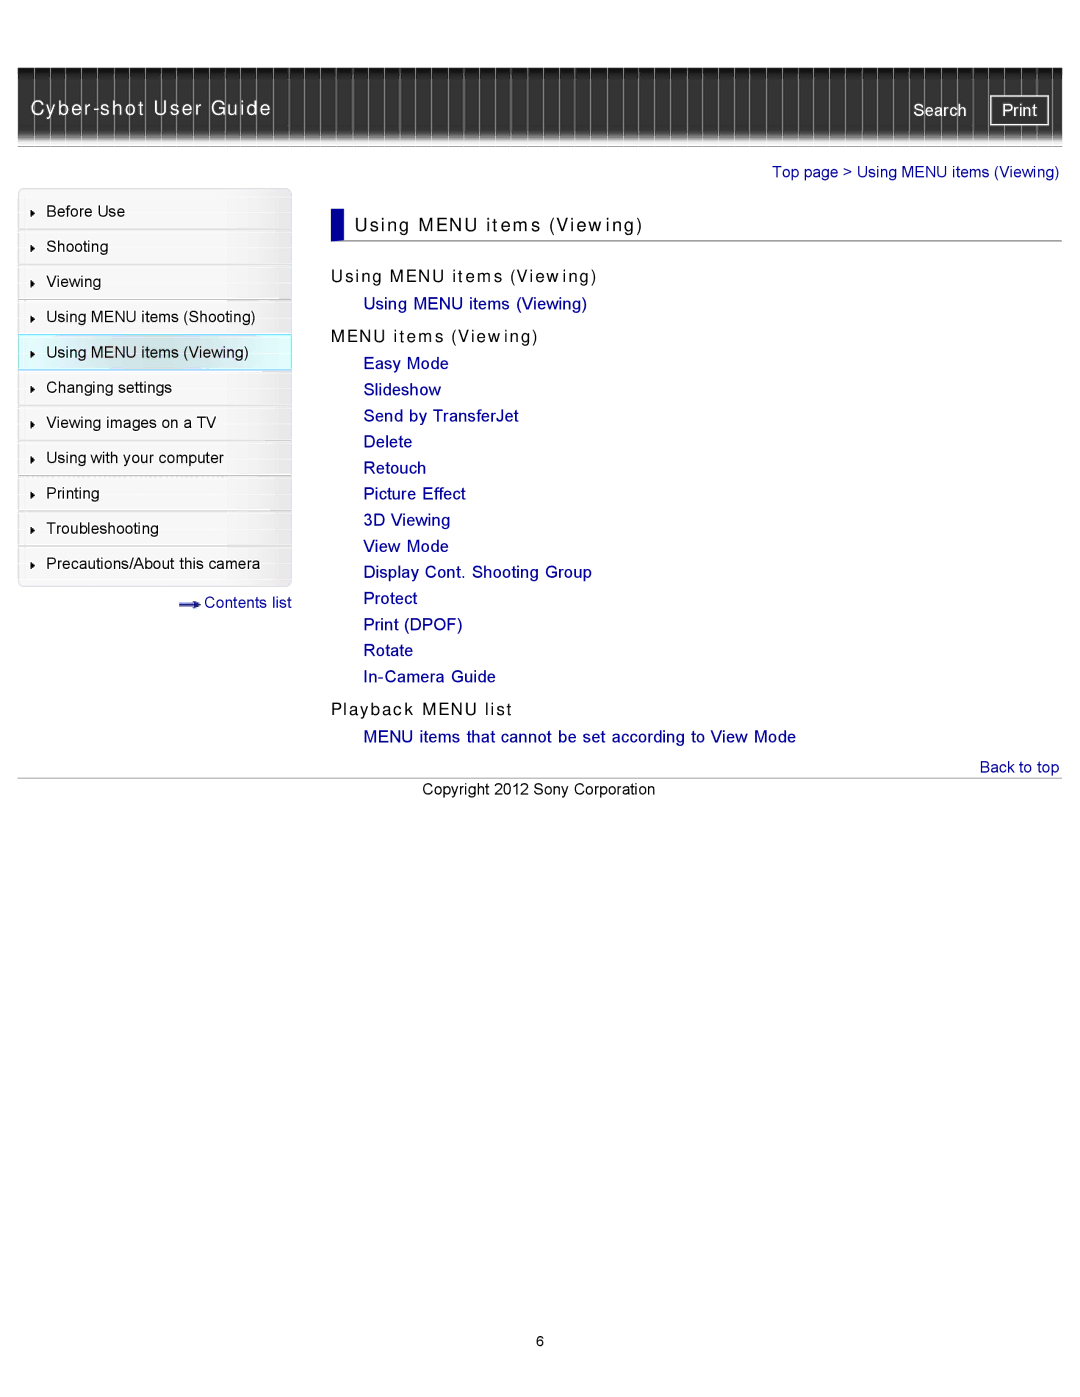 Sony DSC-WX150/R, DSC-WX100/WX150, DSCWX150/L manual Using Menu items Viewing, Playback Menu list 